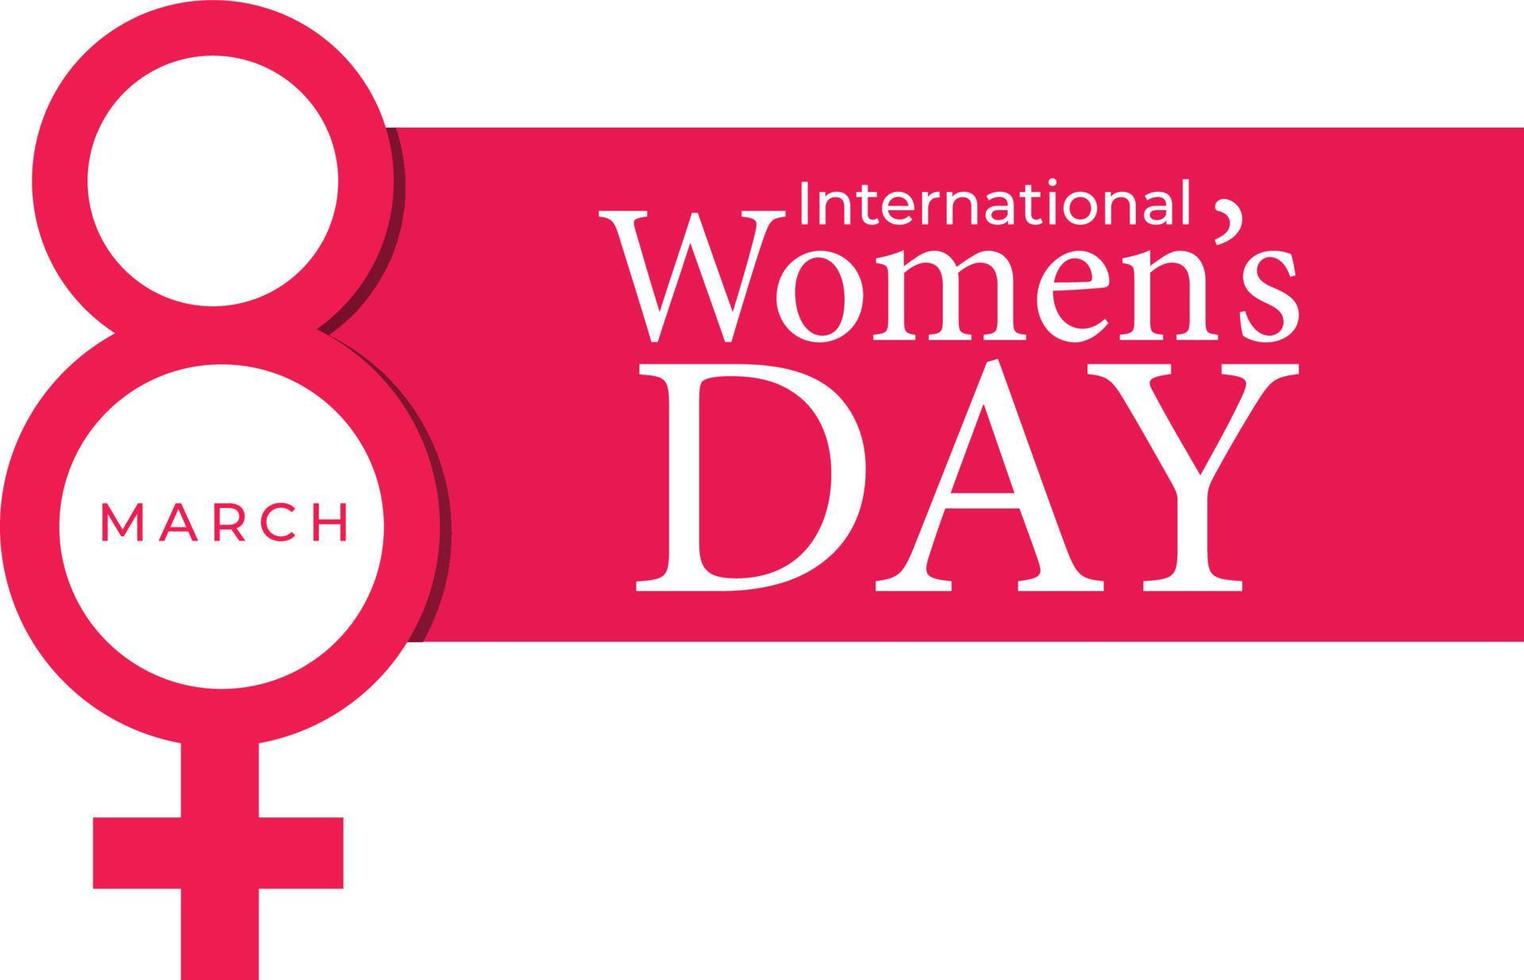 International Women's Day Corporate Pink Banner vector